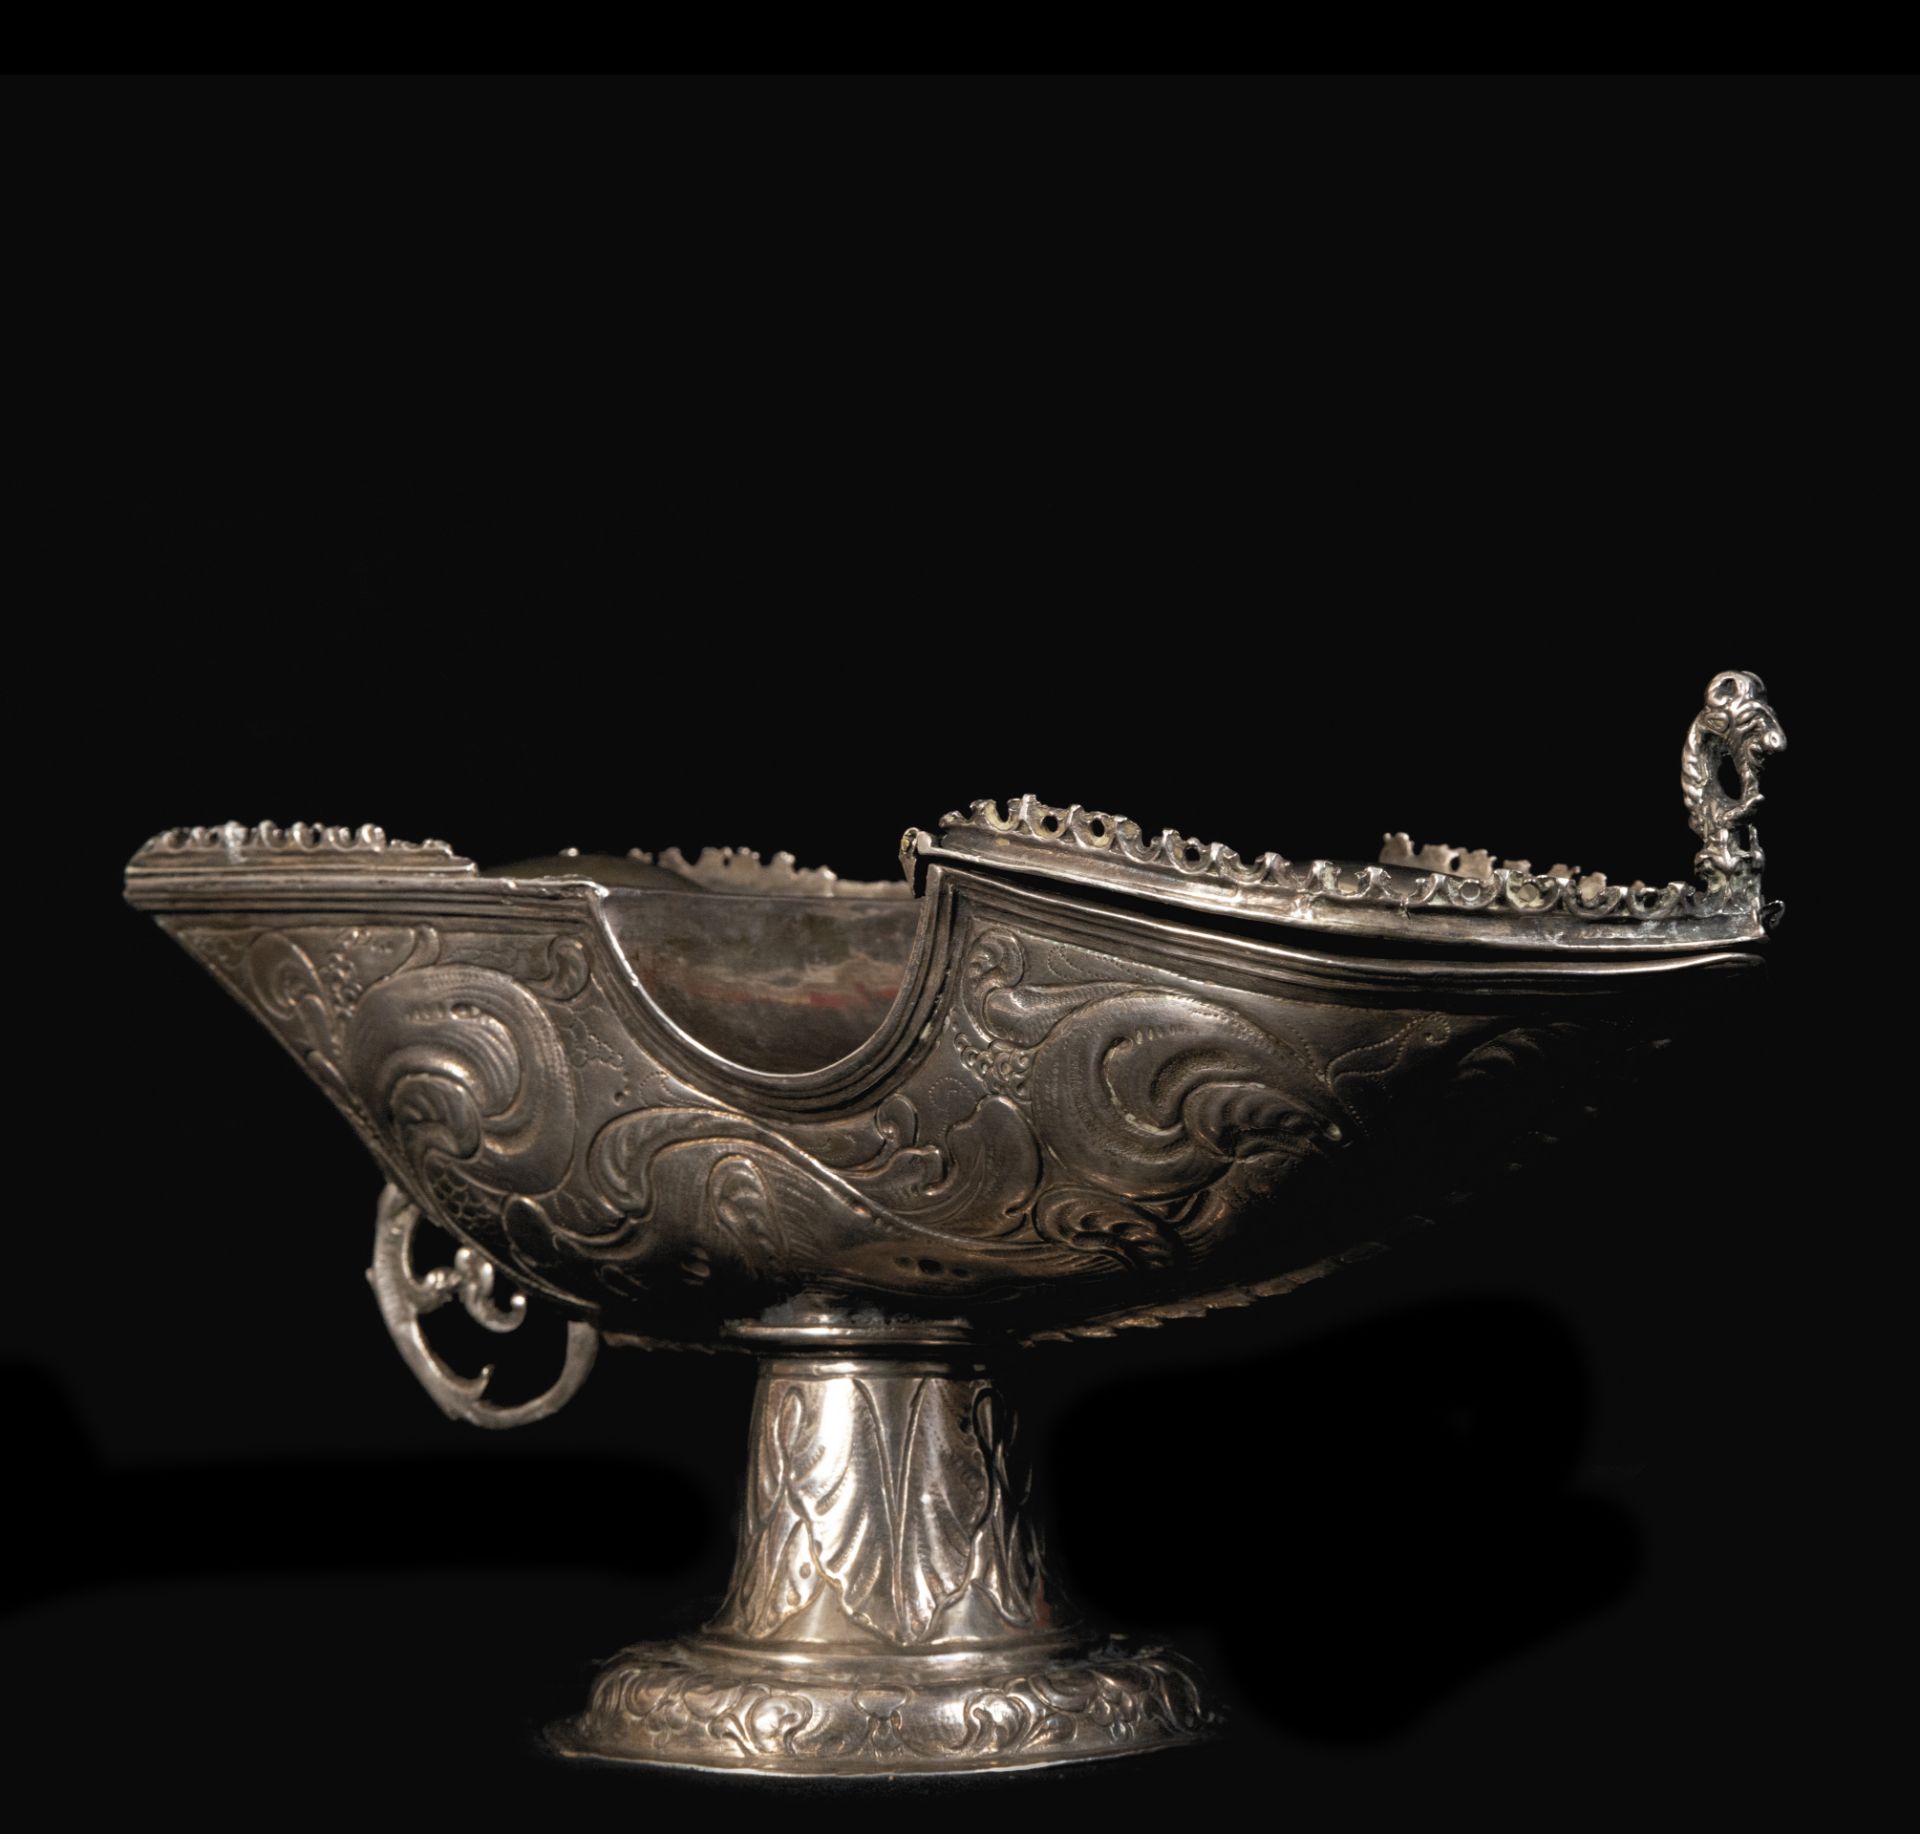 Important Italian Naveta in fine silver from the 17th century